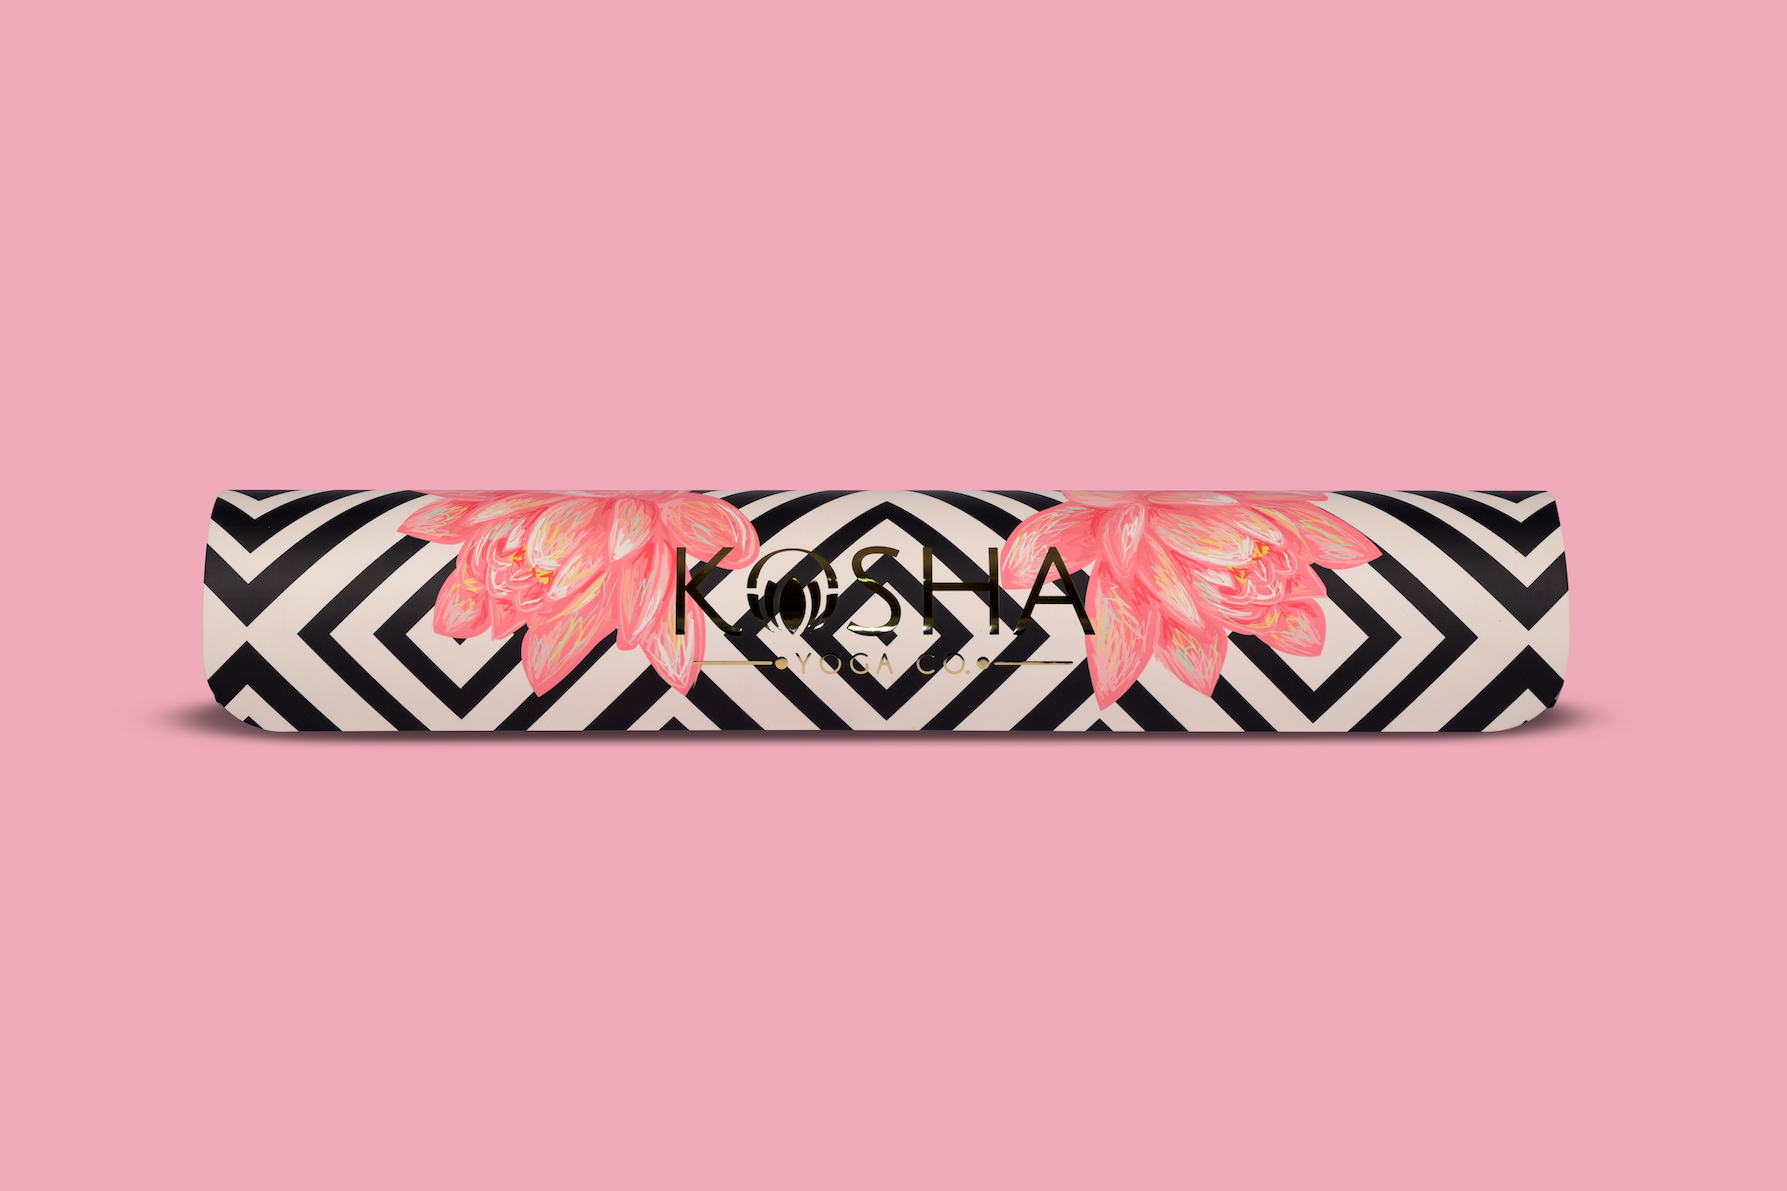 printed lotus yoga mat by kosha yoga co with black and pink flowers